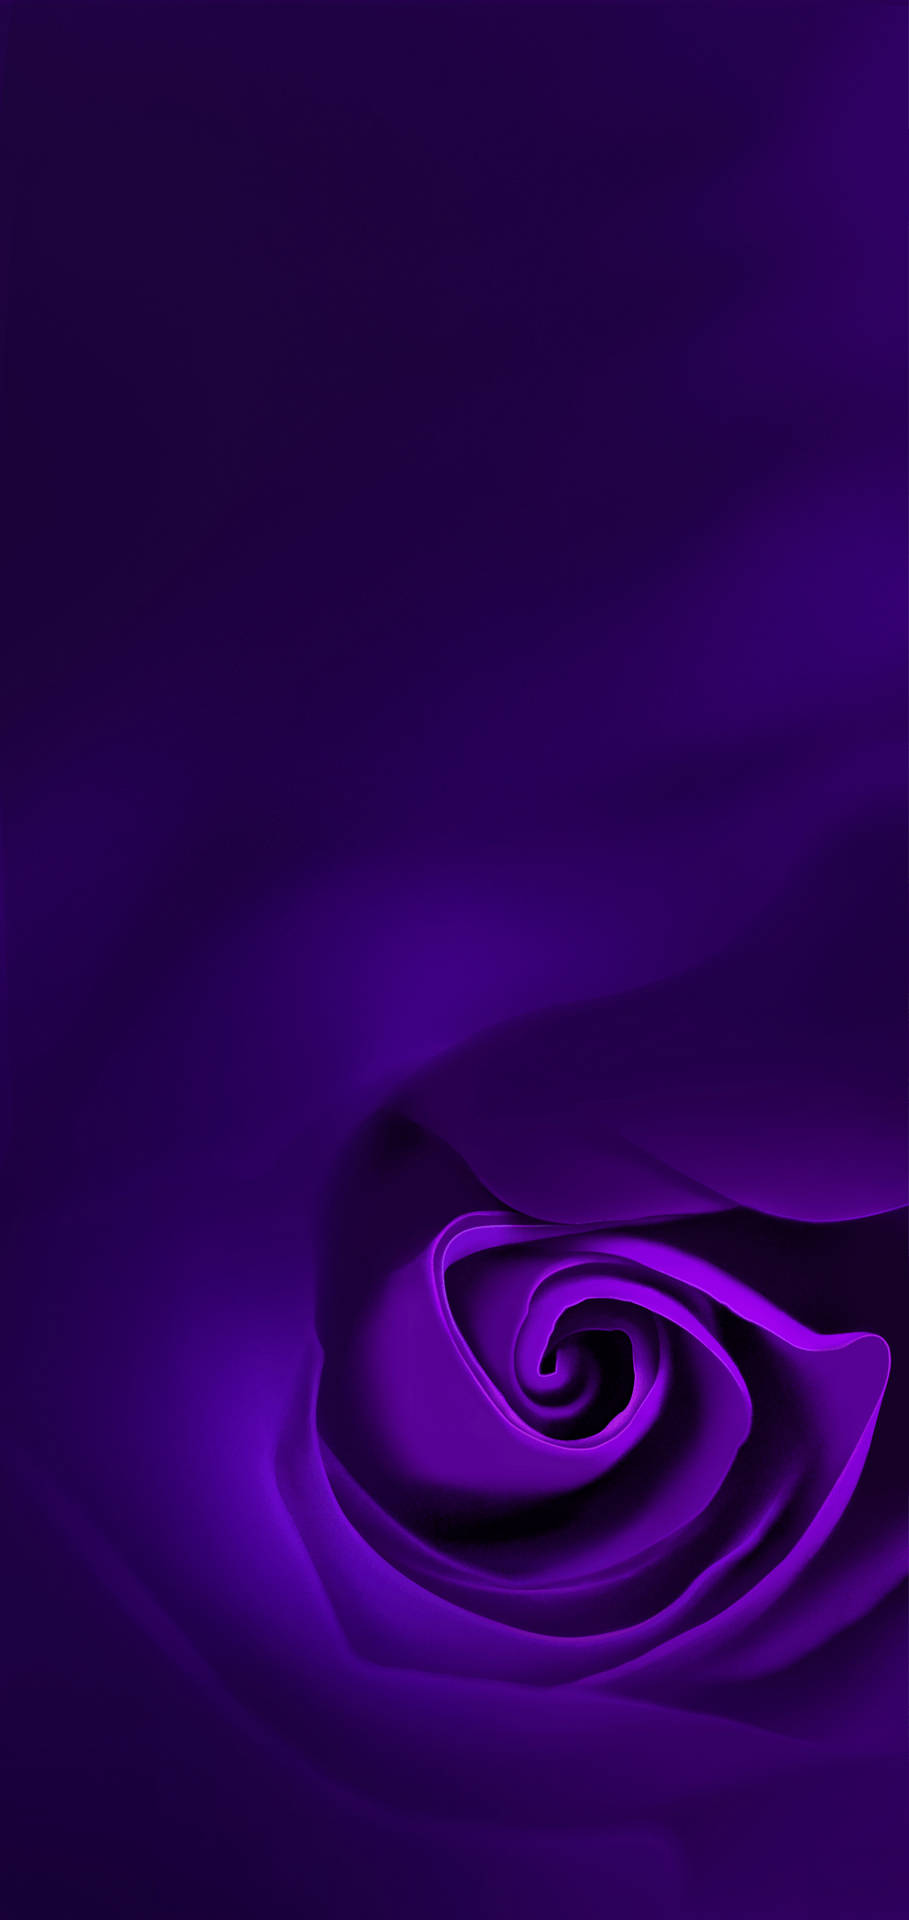 Abstrakt Violet Rose Oppo A5s Wallpaper: Wallpaper